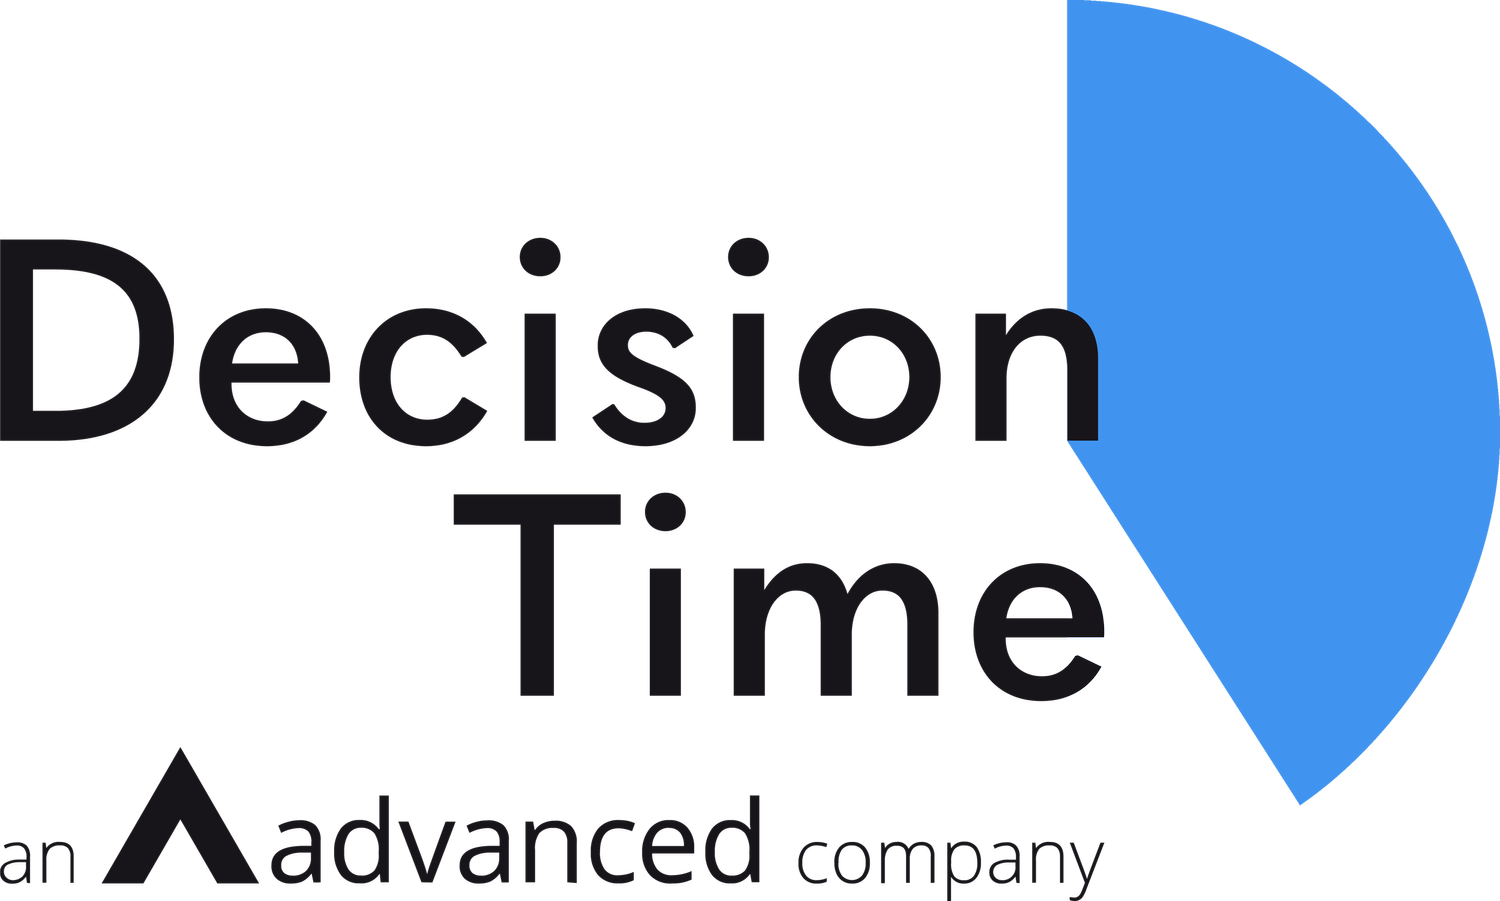 Decision Time - an Advanced company